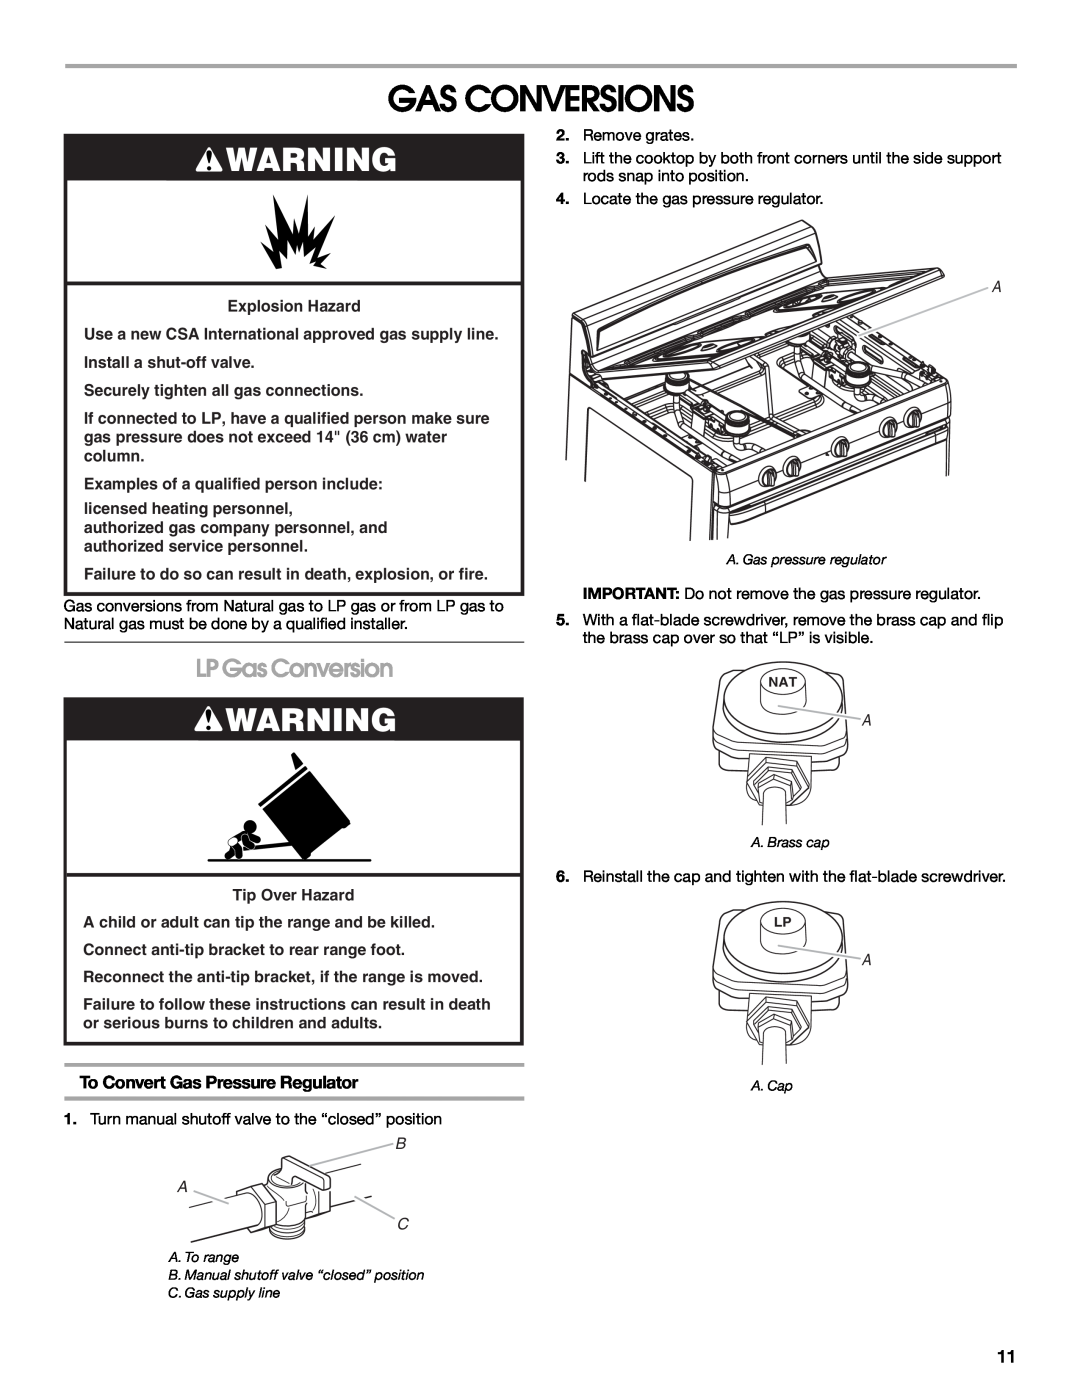 Whirlpool W10325493A installation instructions Gas Conversions, LP Gas Conversion, To Convert Gas Pressure Regulator, B A C 